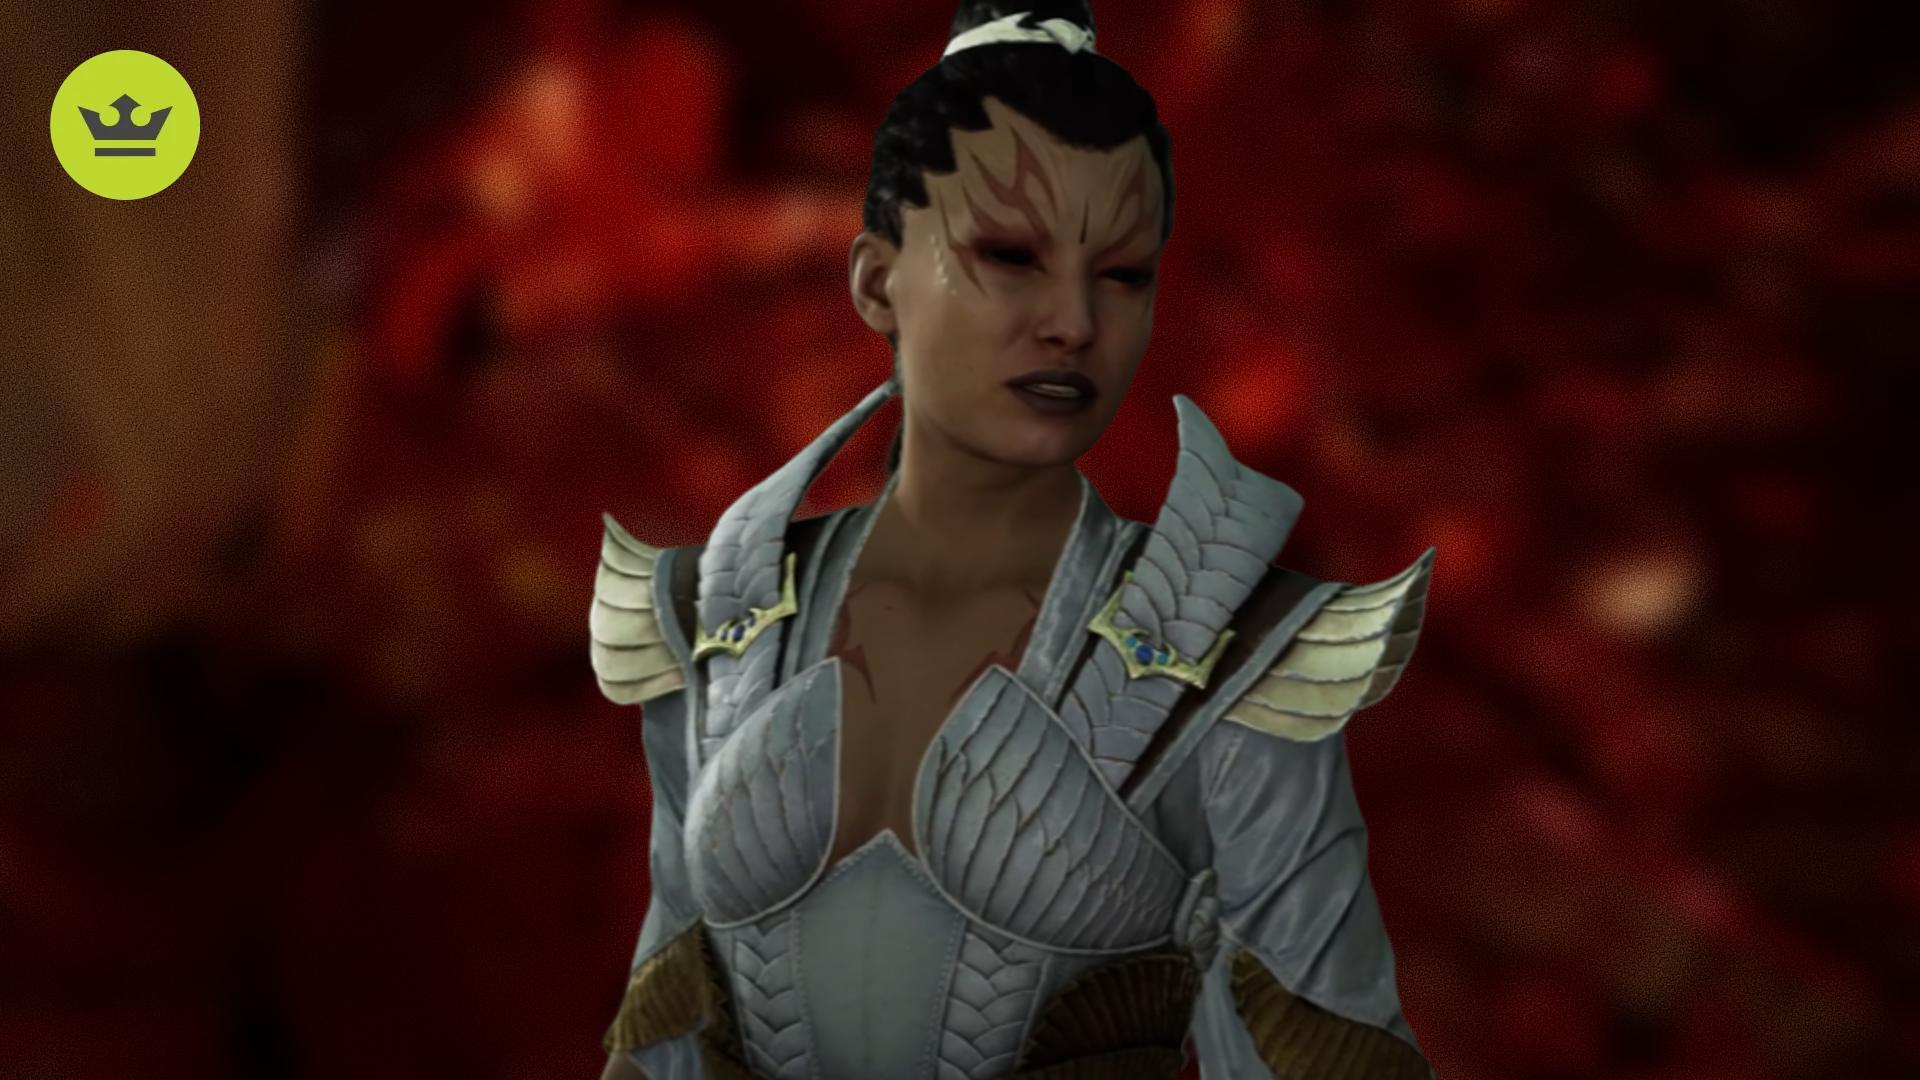 Mortal Kombat 1 Characters: Ashrah can be seen